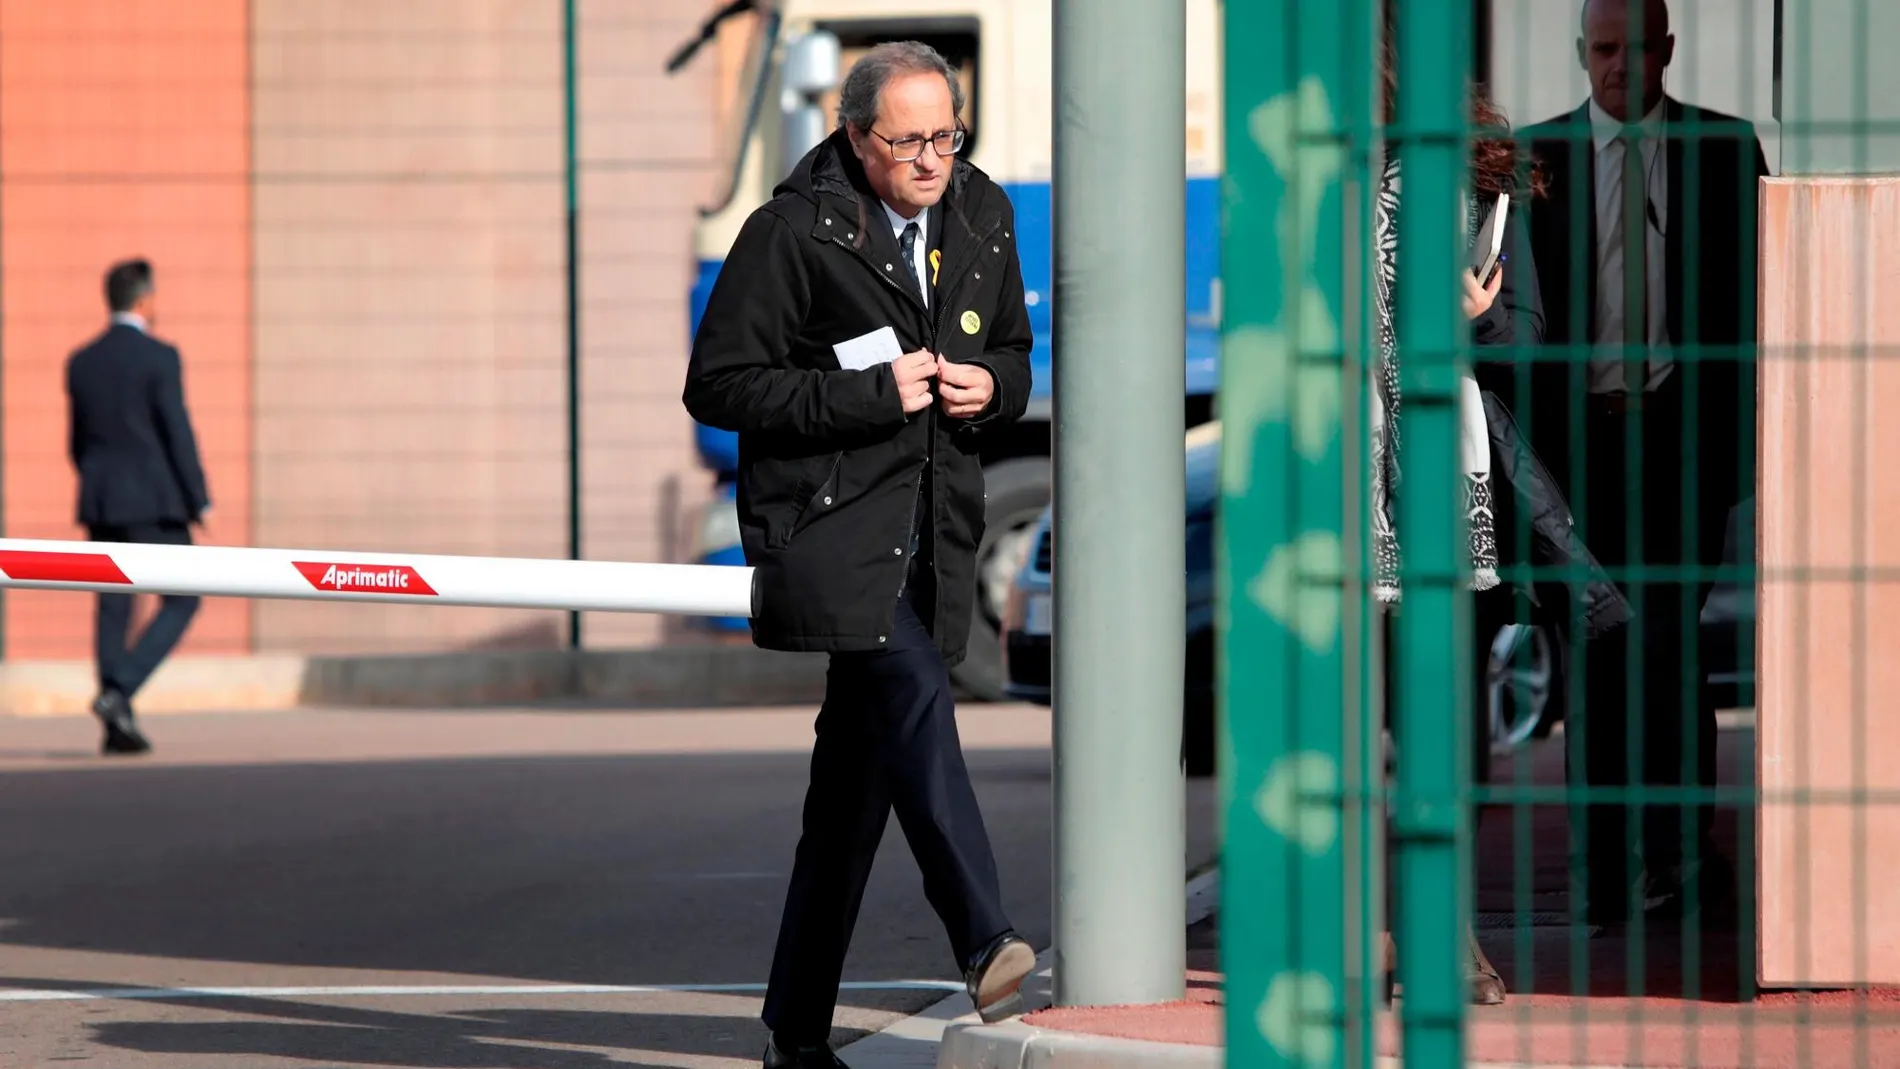 El presidente de la Generalitat, Quim Torra, en una imagen de archivo a su salida del centro penitenciario de Lledoners donde visitó a Jordi Sànchez y Jordi Turull